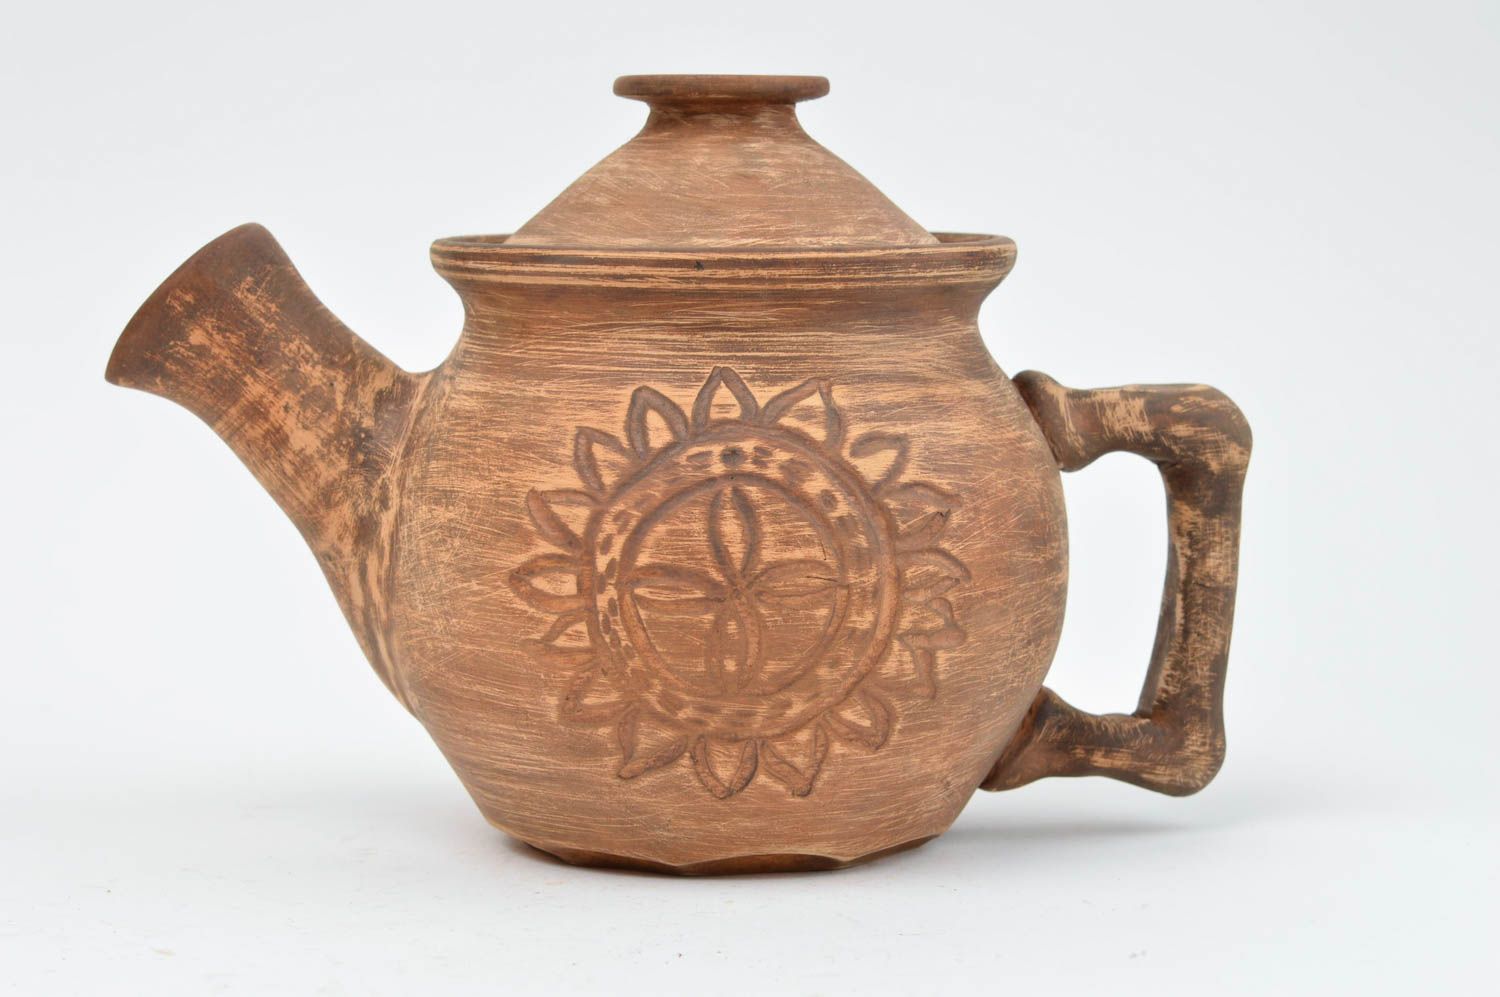 Unusual handmade ceramic teapot designer clay teapot table setting ideas photo 2